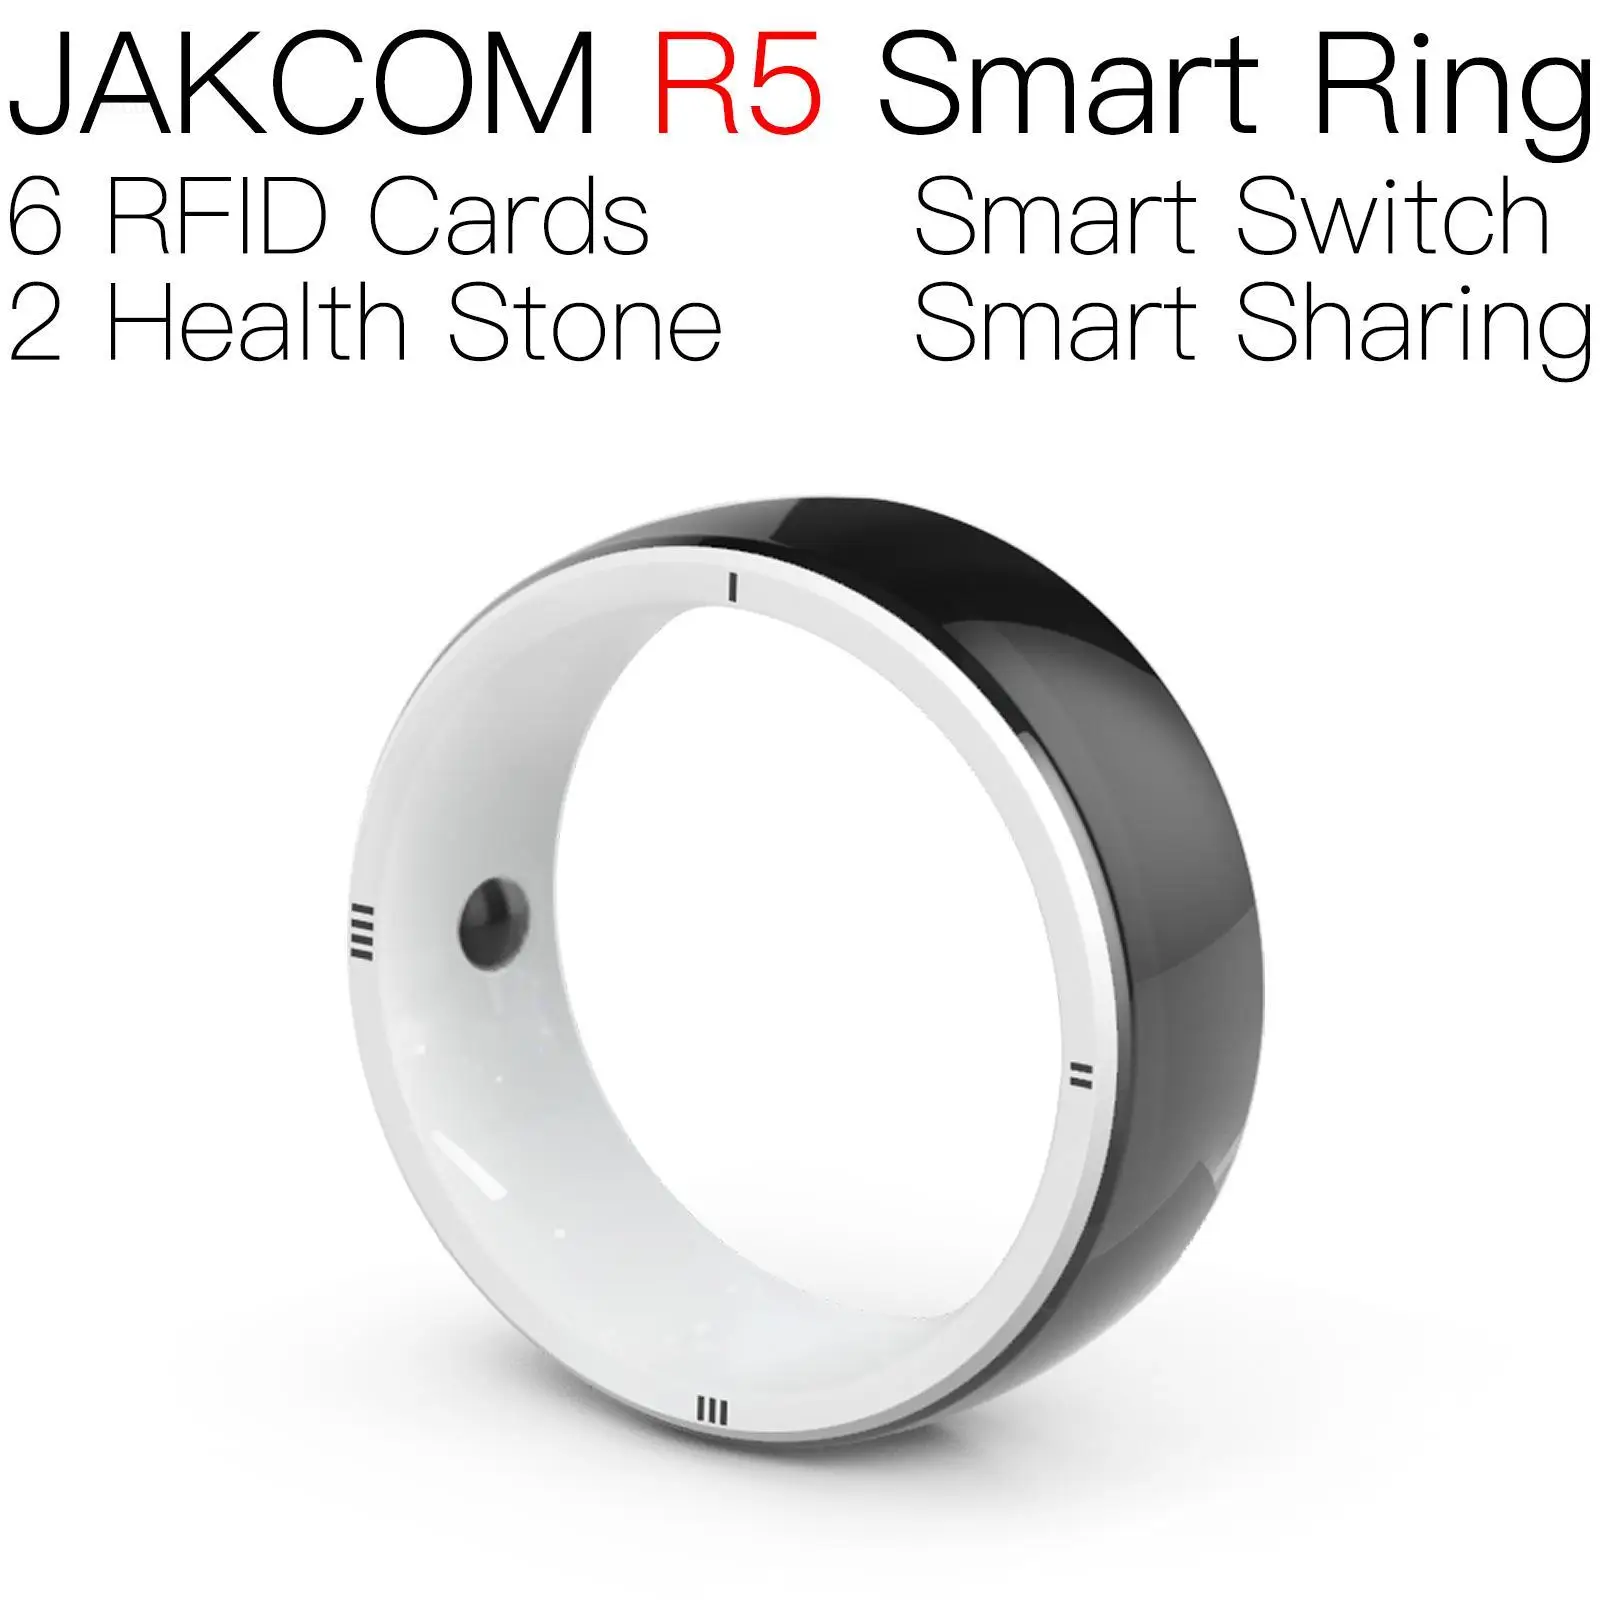 

JAKCOM R5 Smart Ring Nice than rfid dual chip pulsera 125 tag fleet slr premium card platinum coil pasito jeep pure